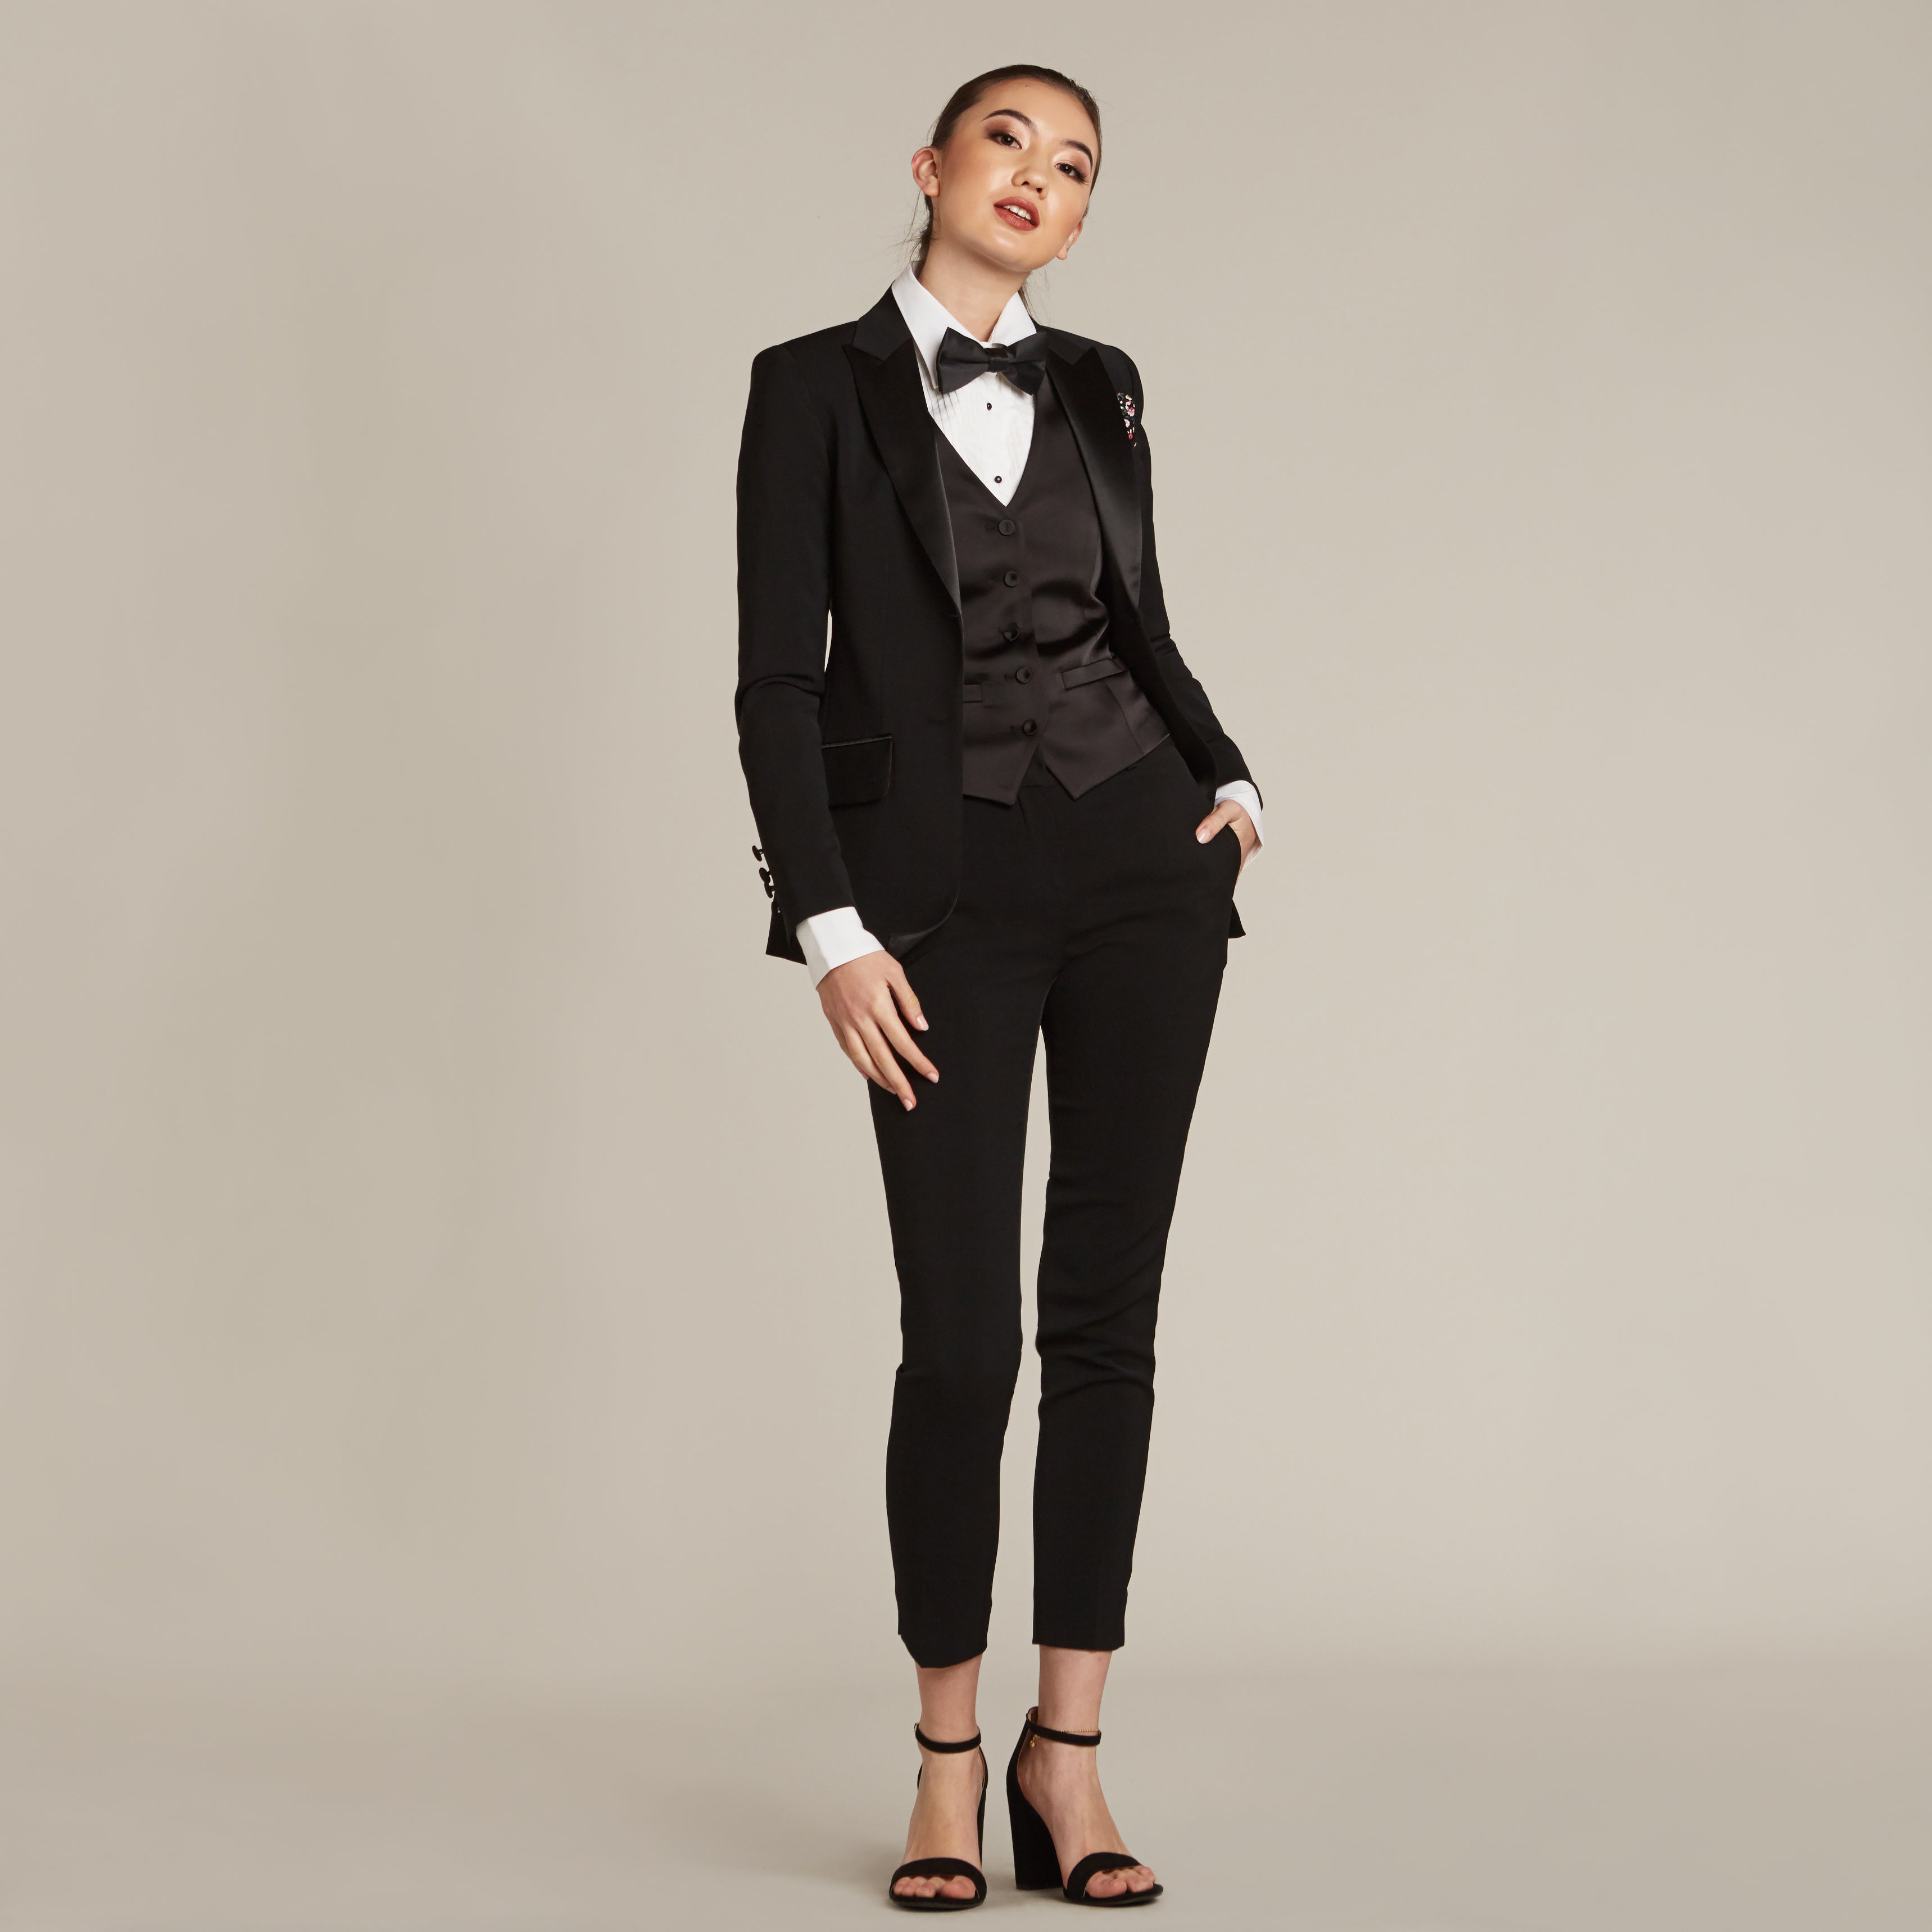 Hugo Boss Getlin Dress Pant in Black – Raggs - Fashion for Men and Women